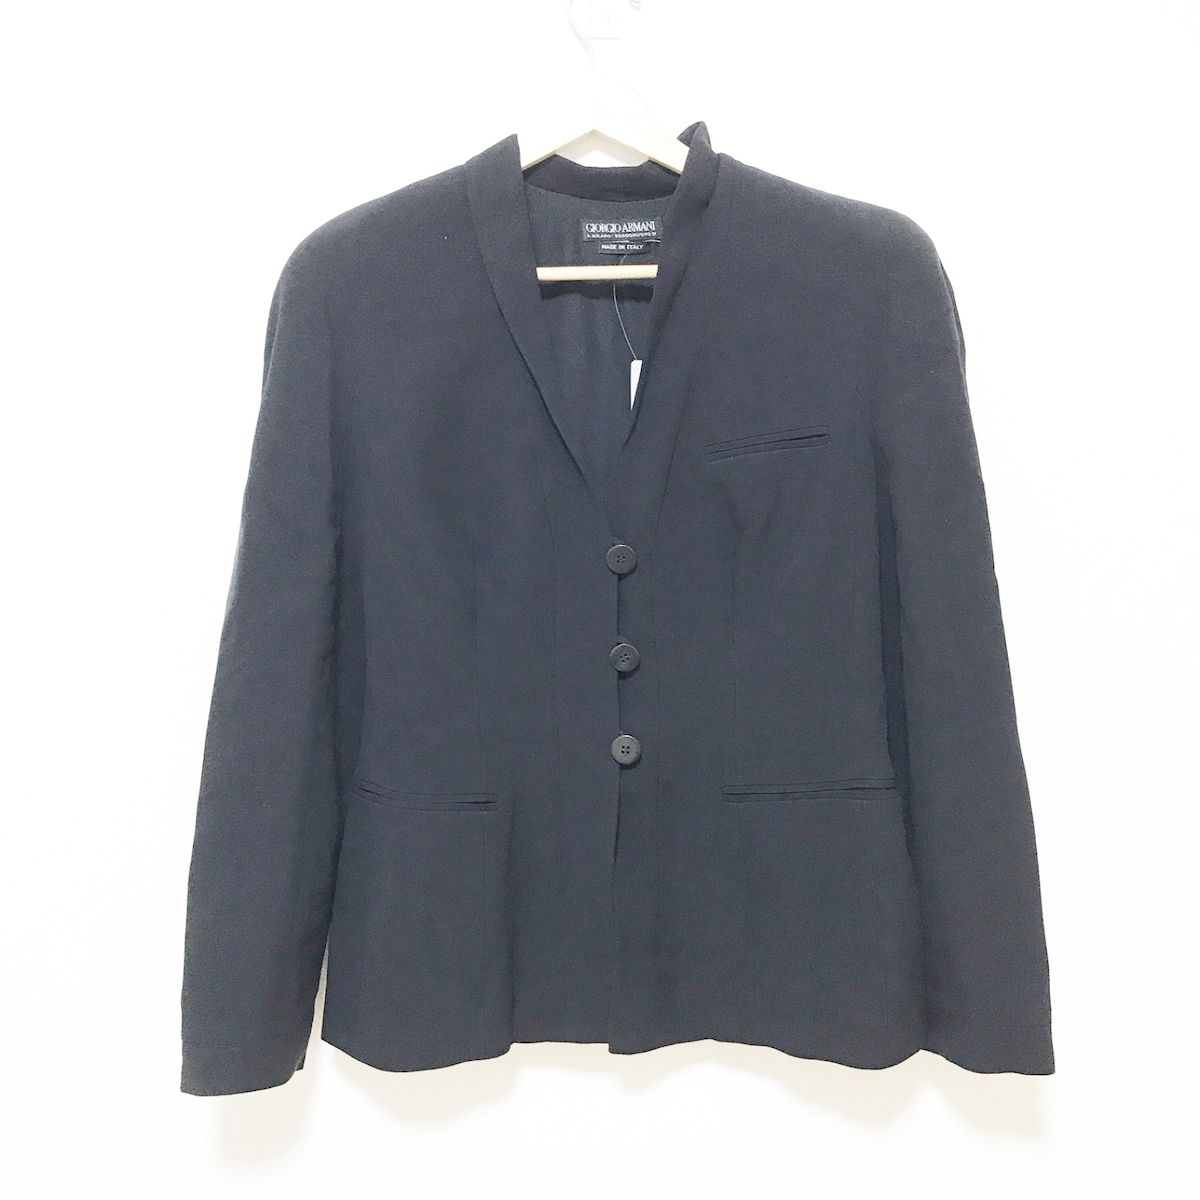 GIORGIOARMANI(ジョルジオアルマーニ) ジャケット サイズ42 M レディース美品 - 黒 長袖/シルク/肩パッド/春/秋